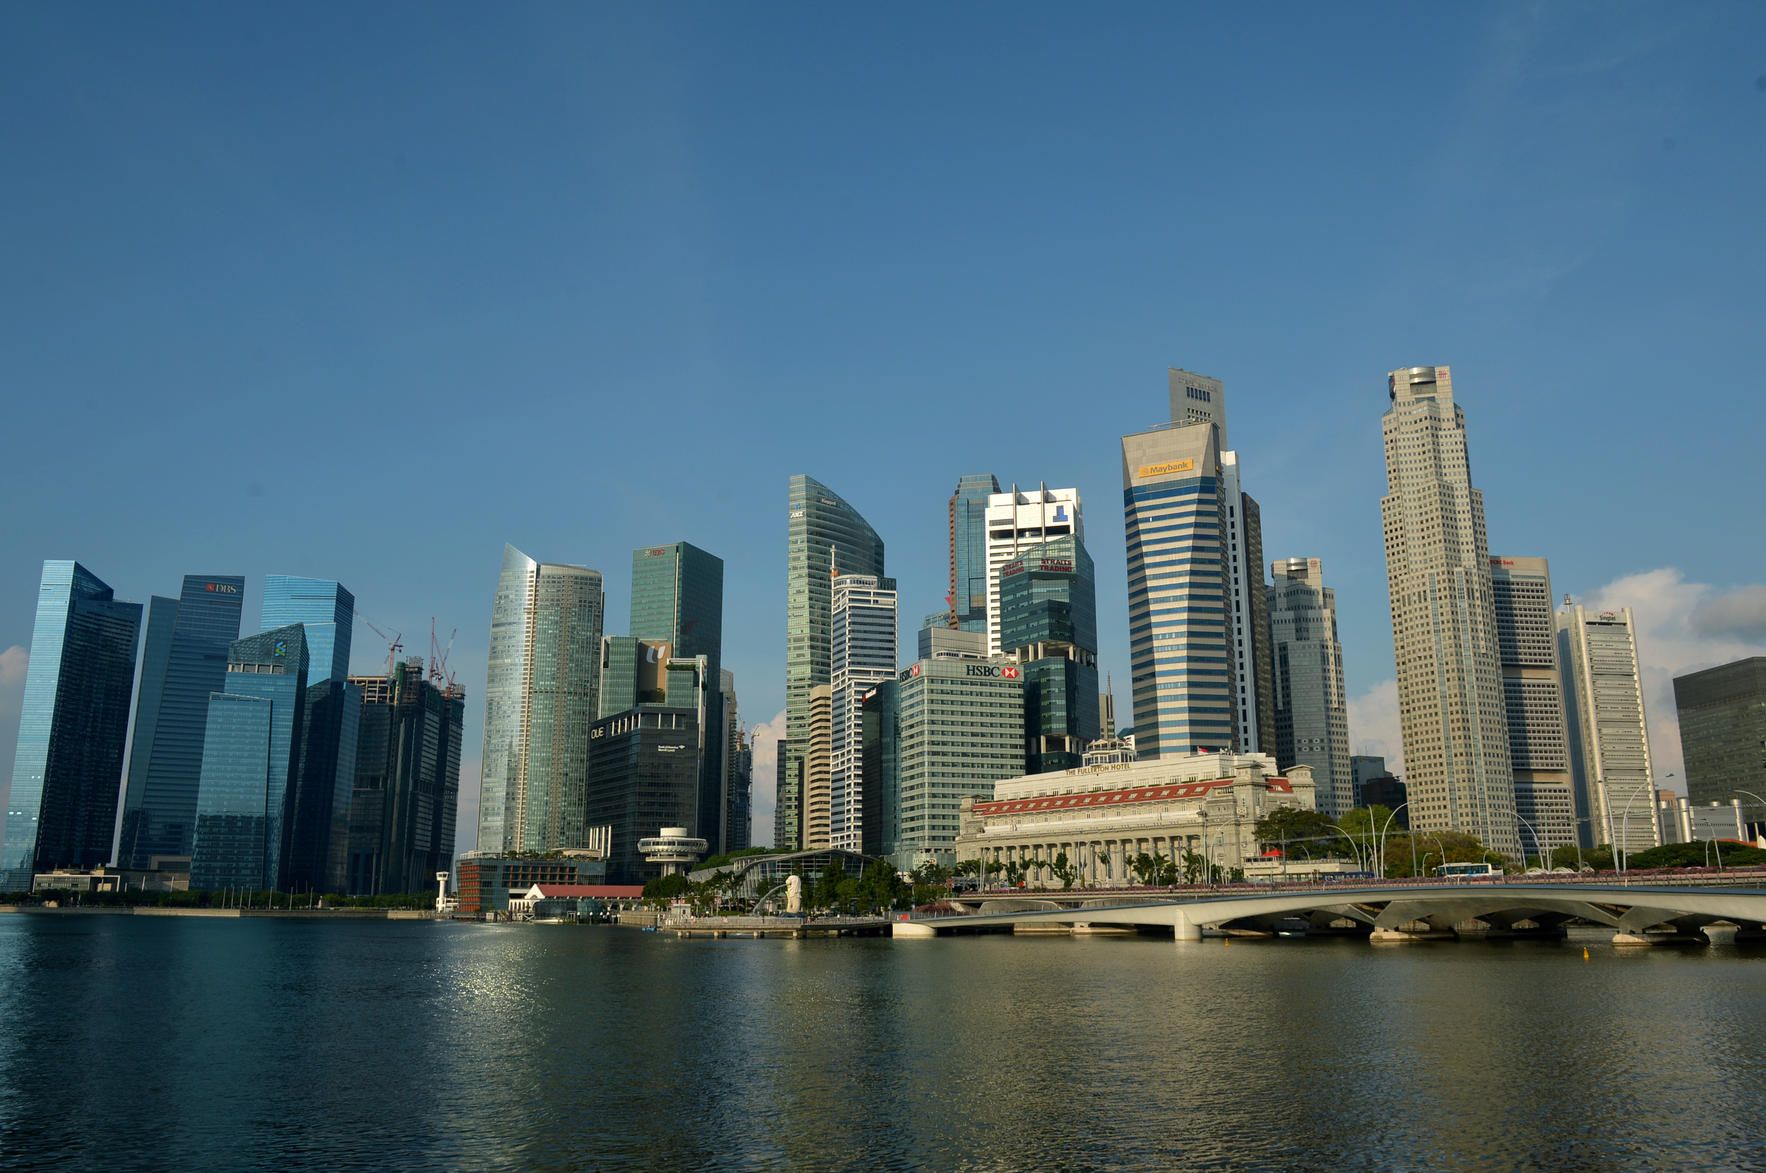 Singapore, London in race to be top global fintech hub